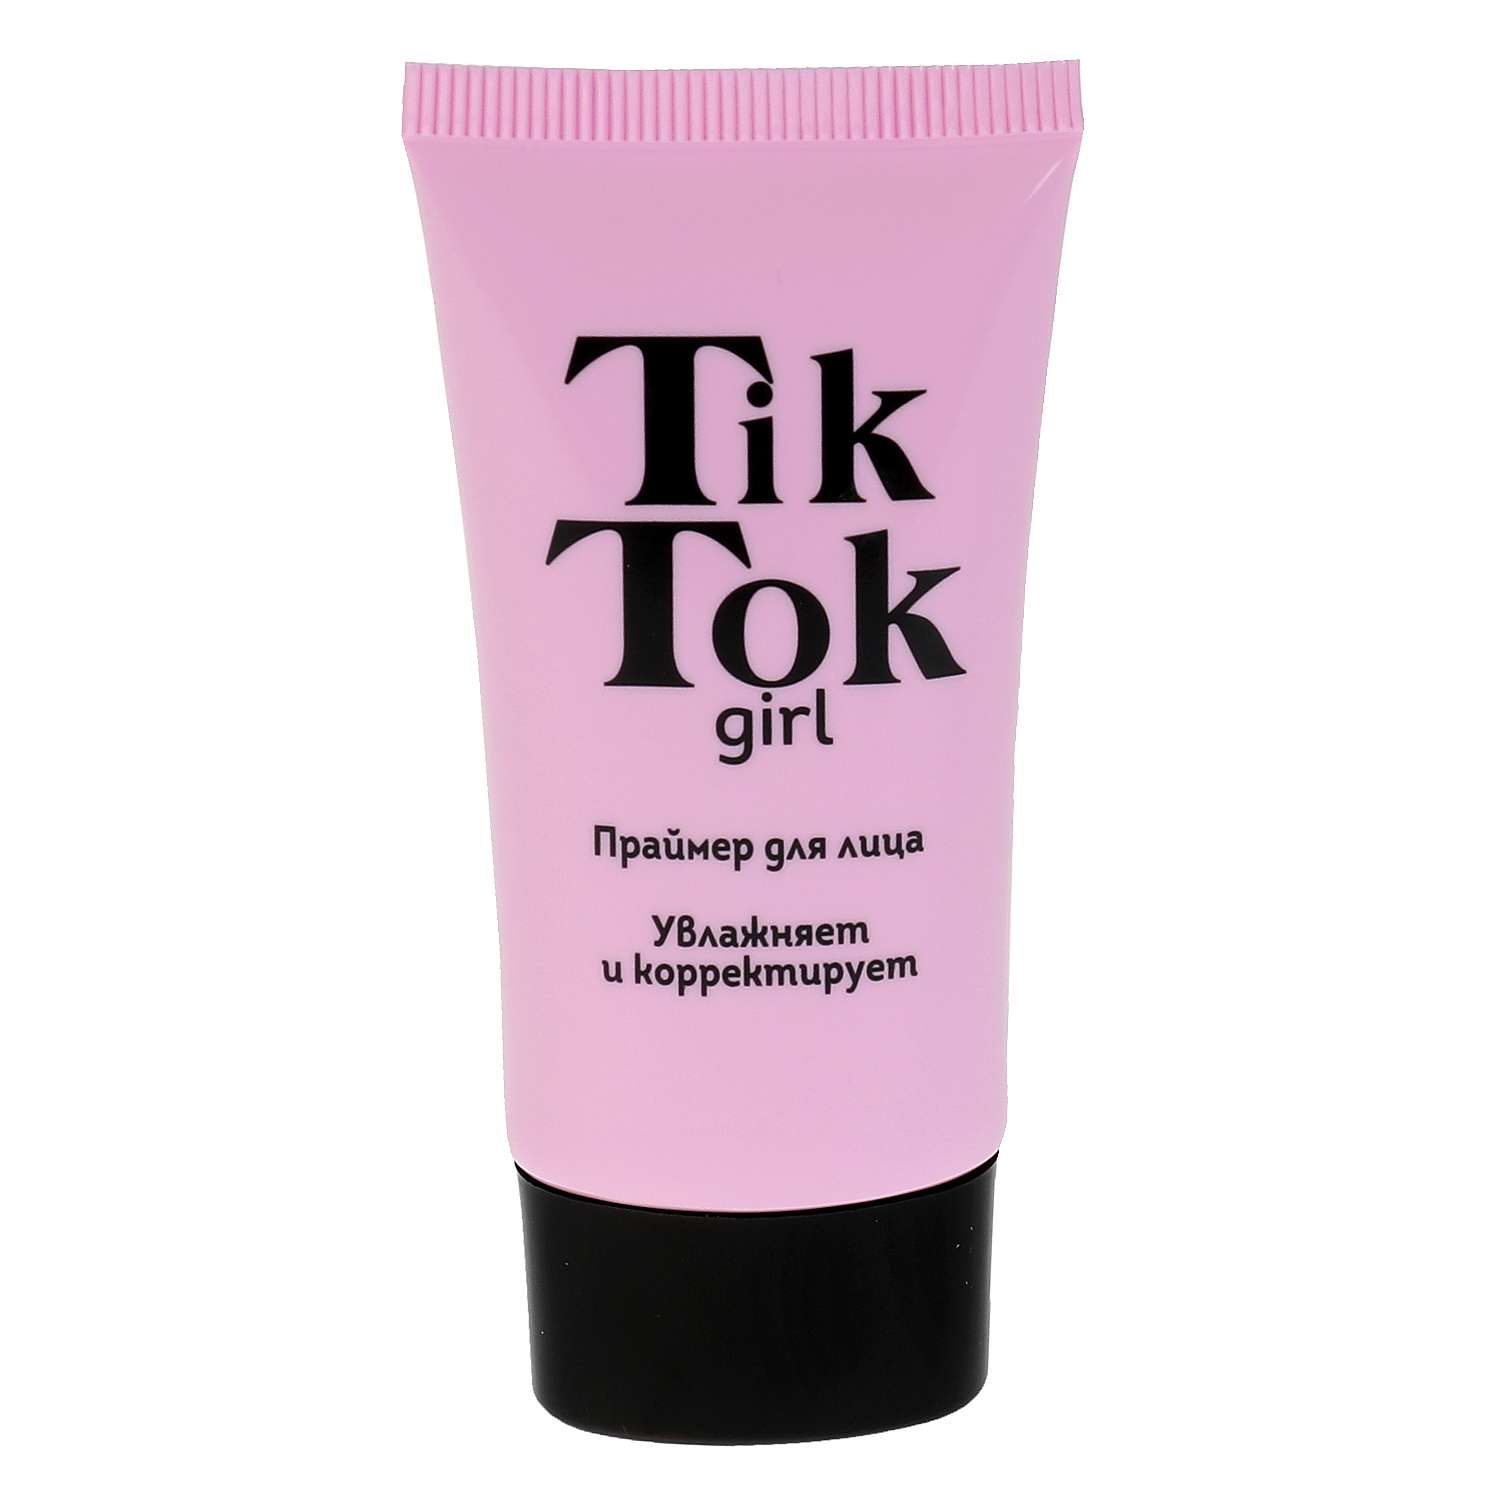 Праймер для лица Tik Tok Girl Розовый 324968 - фото 1